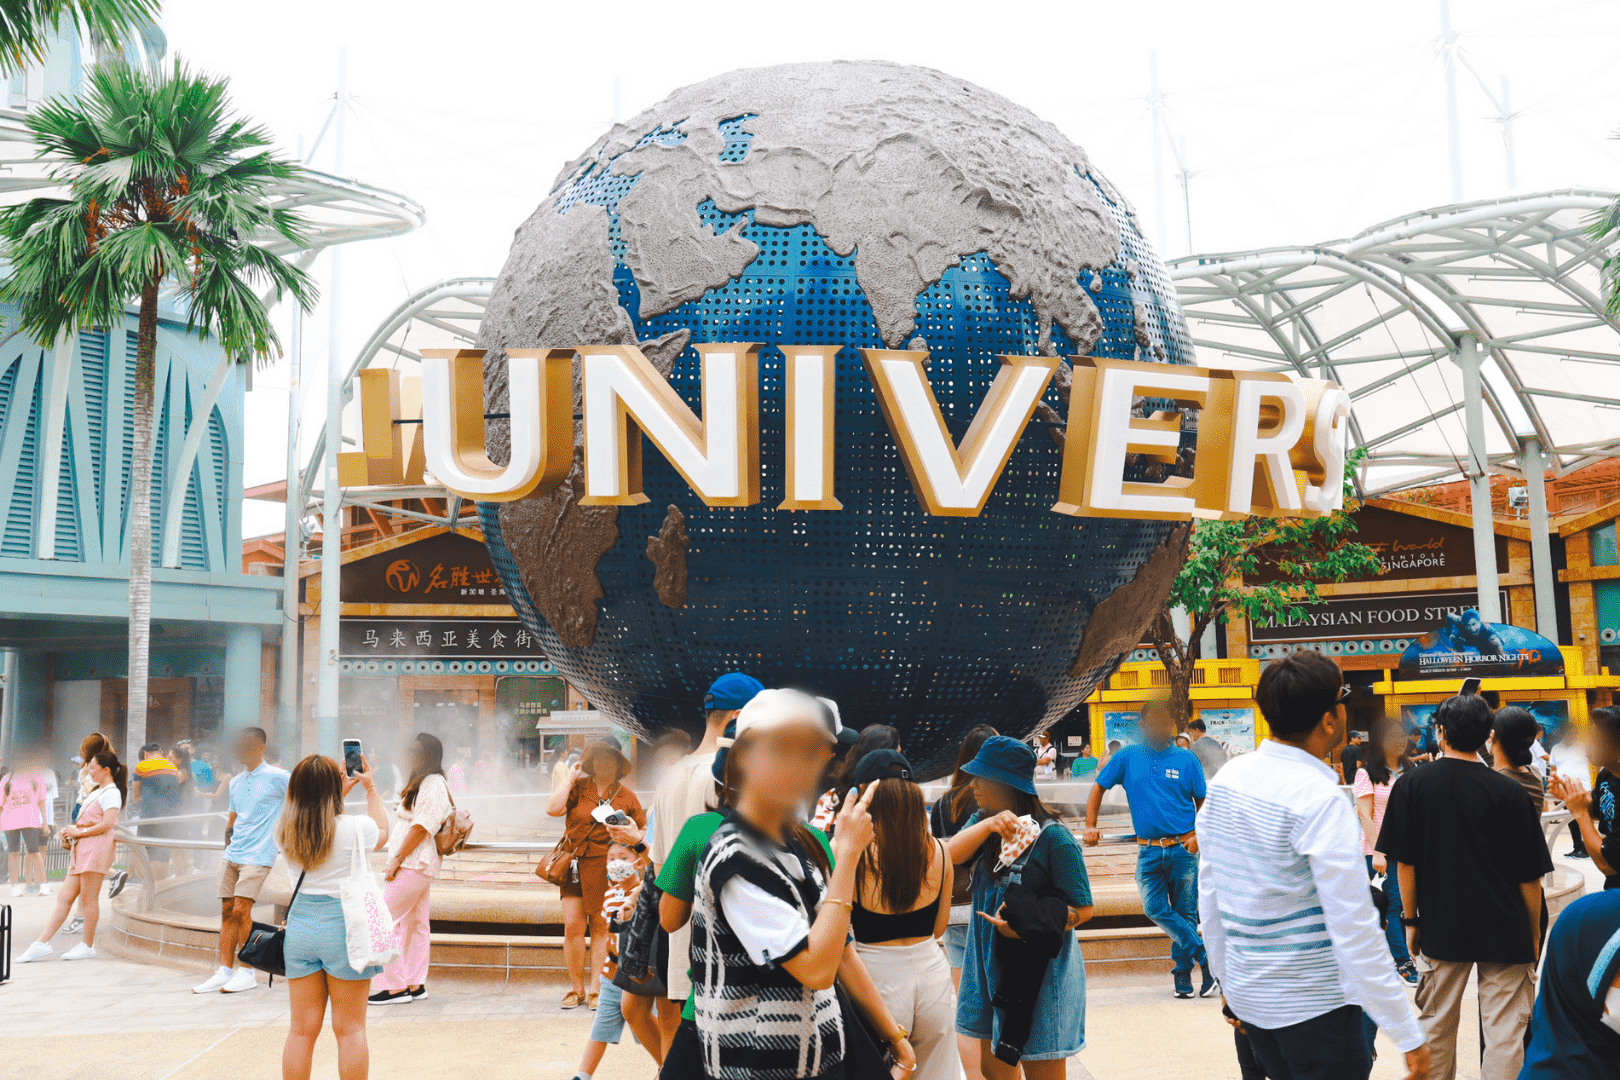 universal studio singapore-universal studio-universal studios singapore-universal studio singapore ticket-universal studio singapore รีวิว-universal studio singapore เครื่องเล่น-เที่ยวสิงคโปร์-เที่ยวสิงคโปร์ 2022-เที่ยวสิงคโปร์ 2023-เที่ยวสิงคโปร์ 2022 pantip-เที่ยวสิงคโปร์ด้วยตัวเอง-เที่ยวสิงคโปร์ด้วยตัวเอง-แผนที่ เที่ยวสิงคโปร์-ไปสิงคโปร์